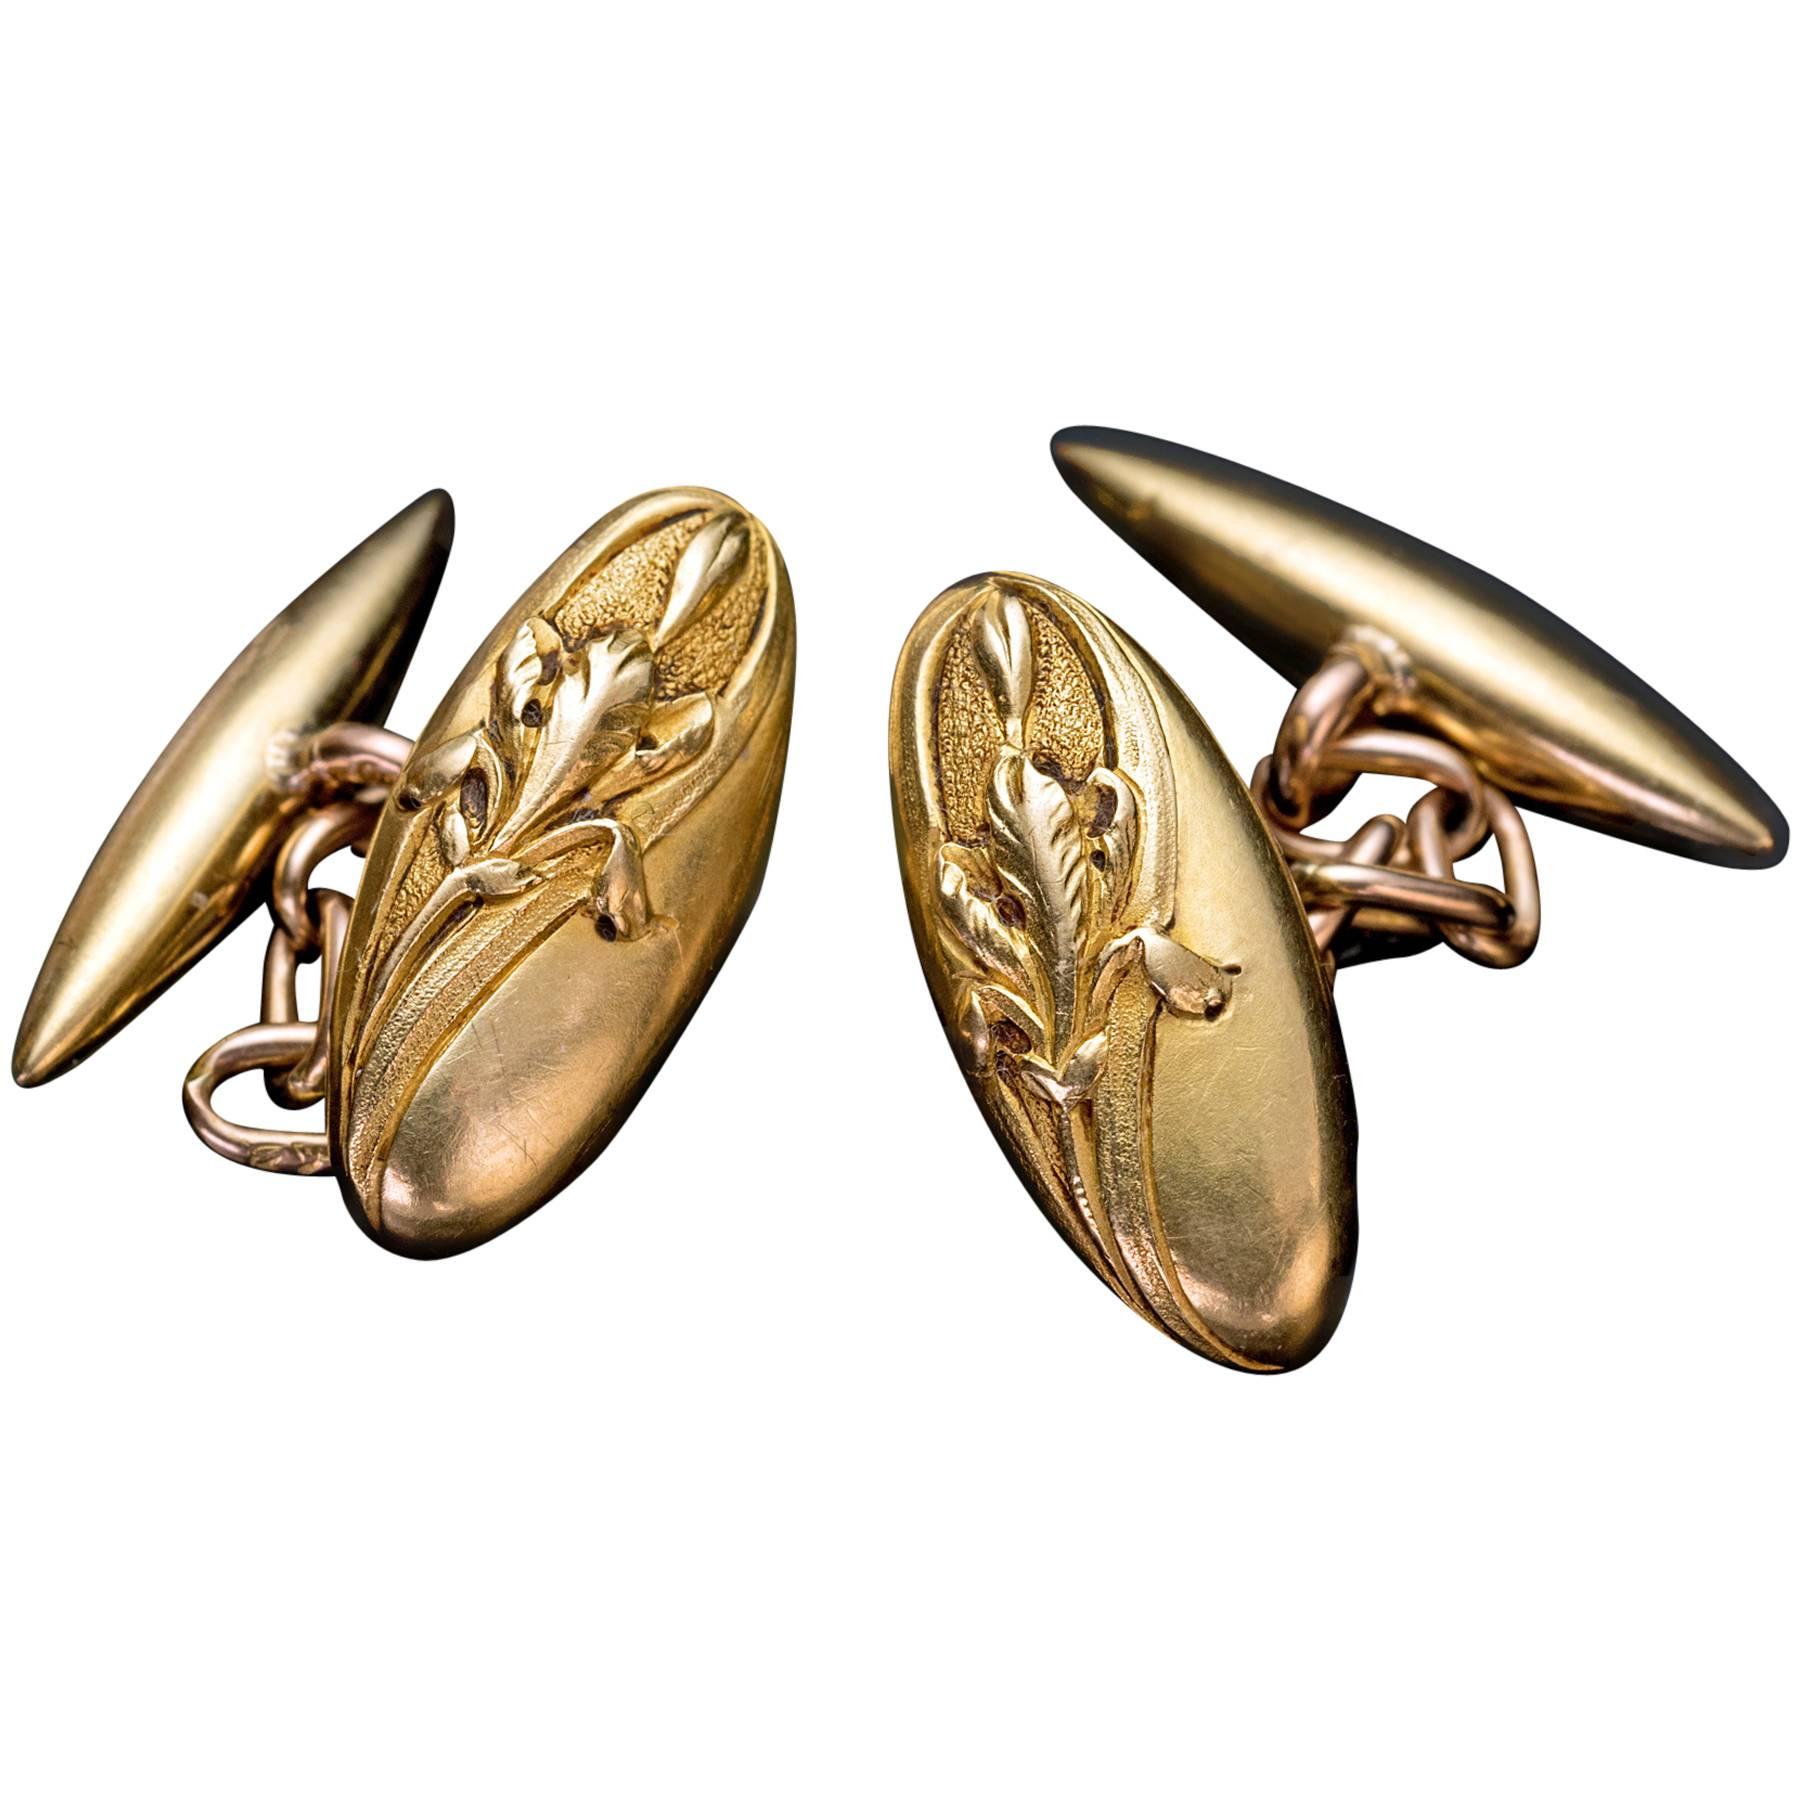 French Antique Art Nouveau Gold Cufflinks For Sale